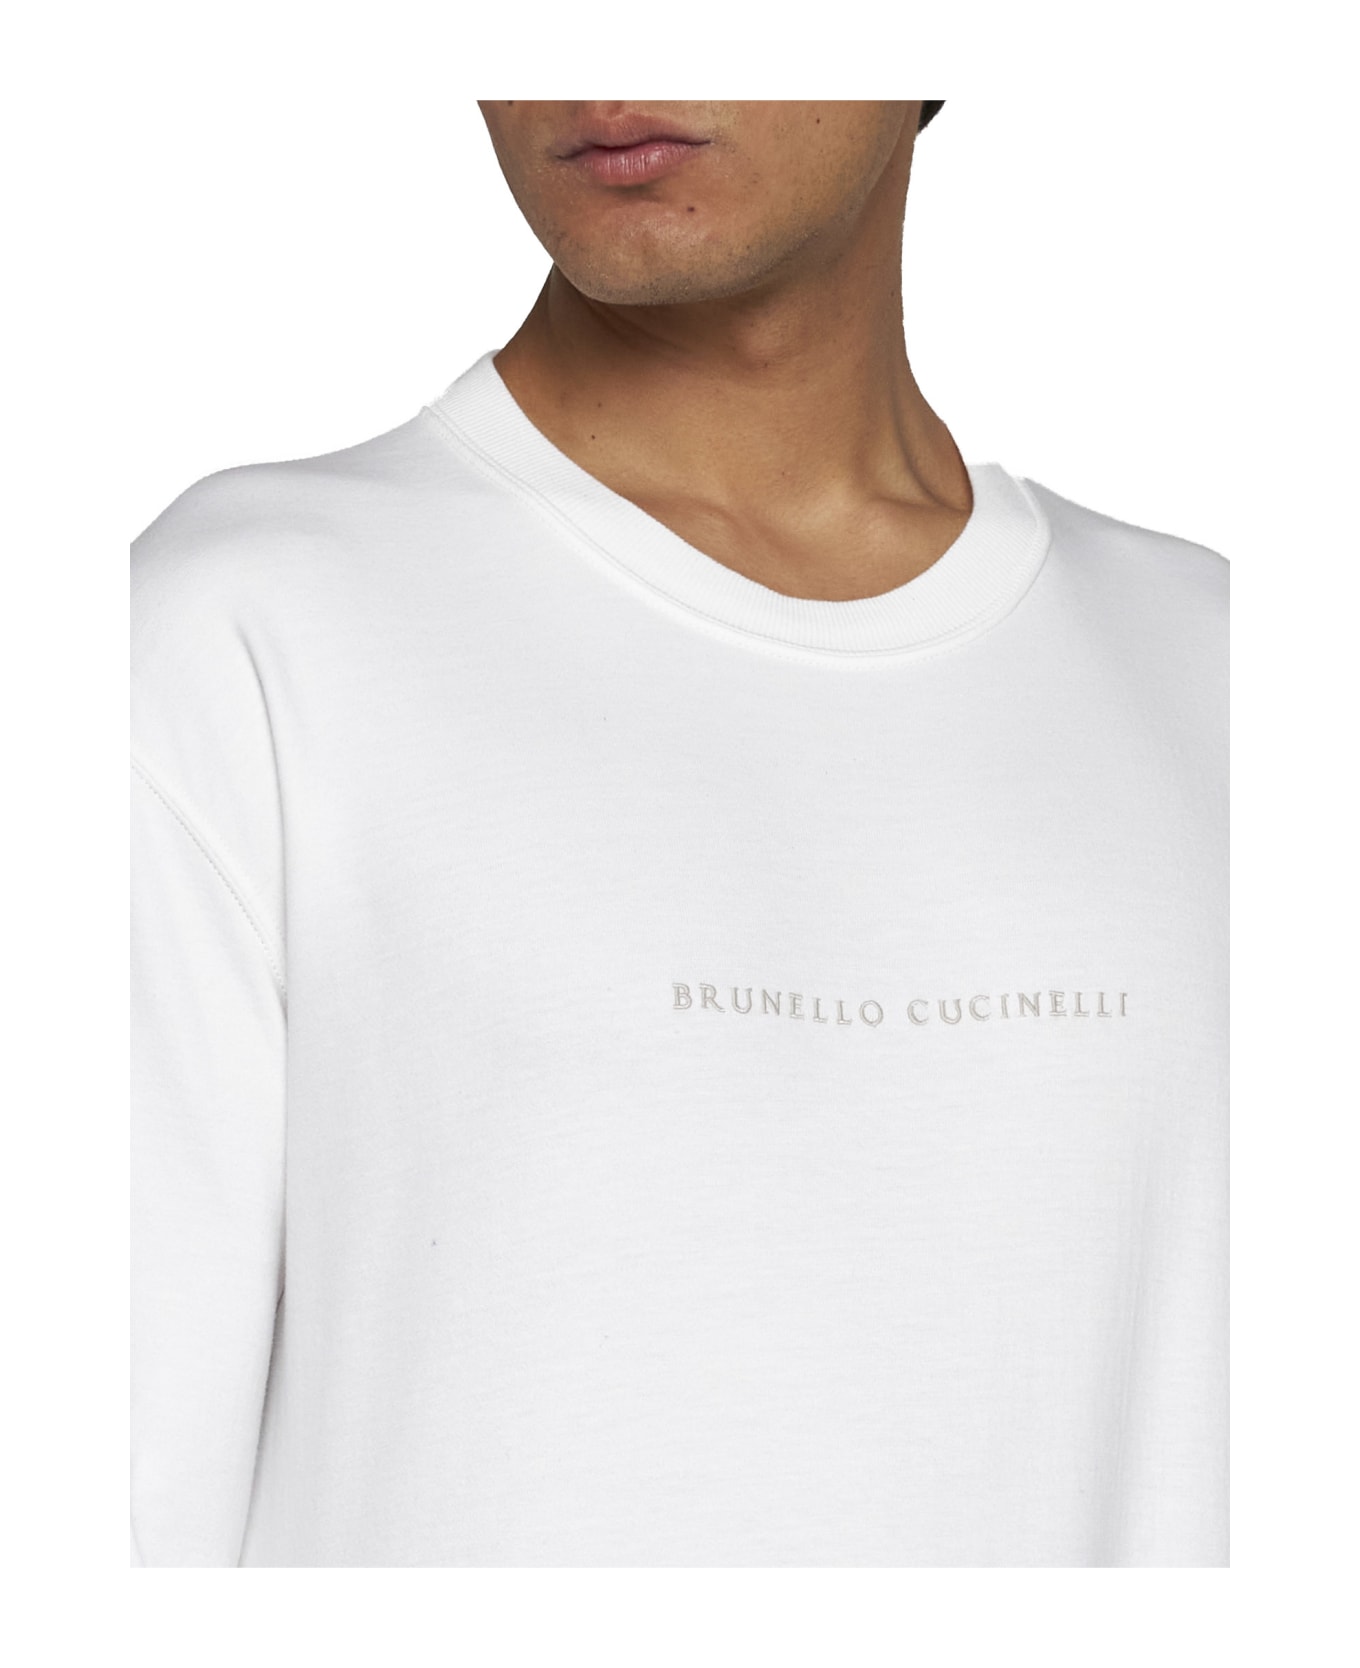 Brunello Cucinelli Fleece - Off white